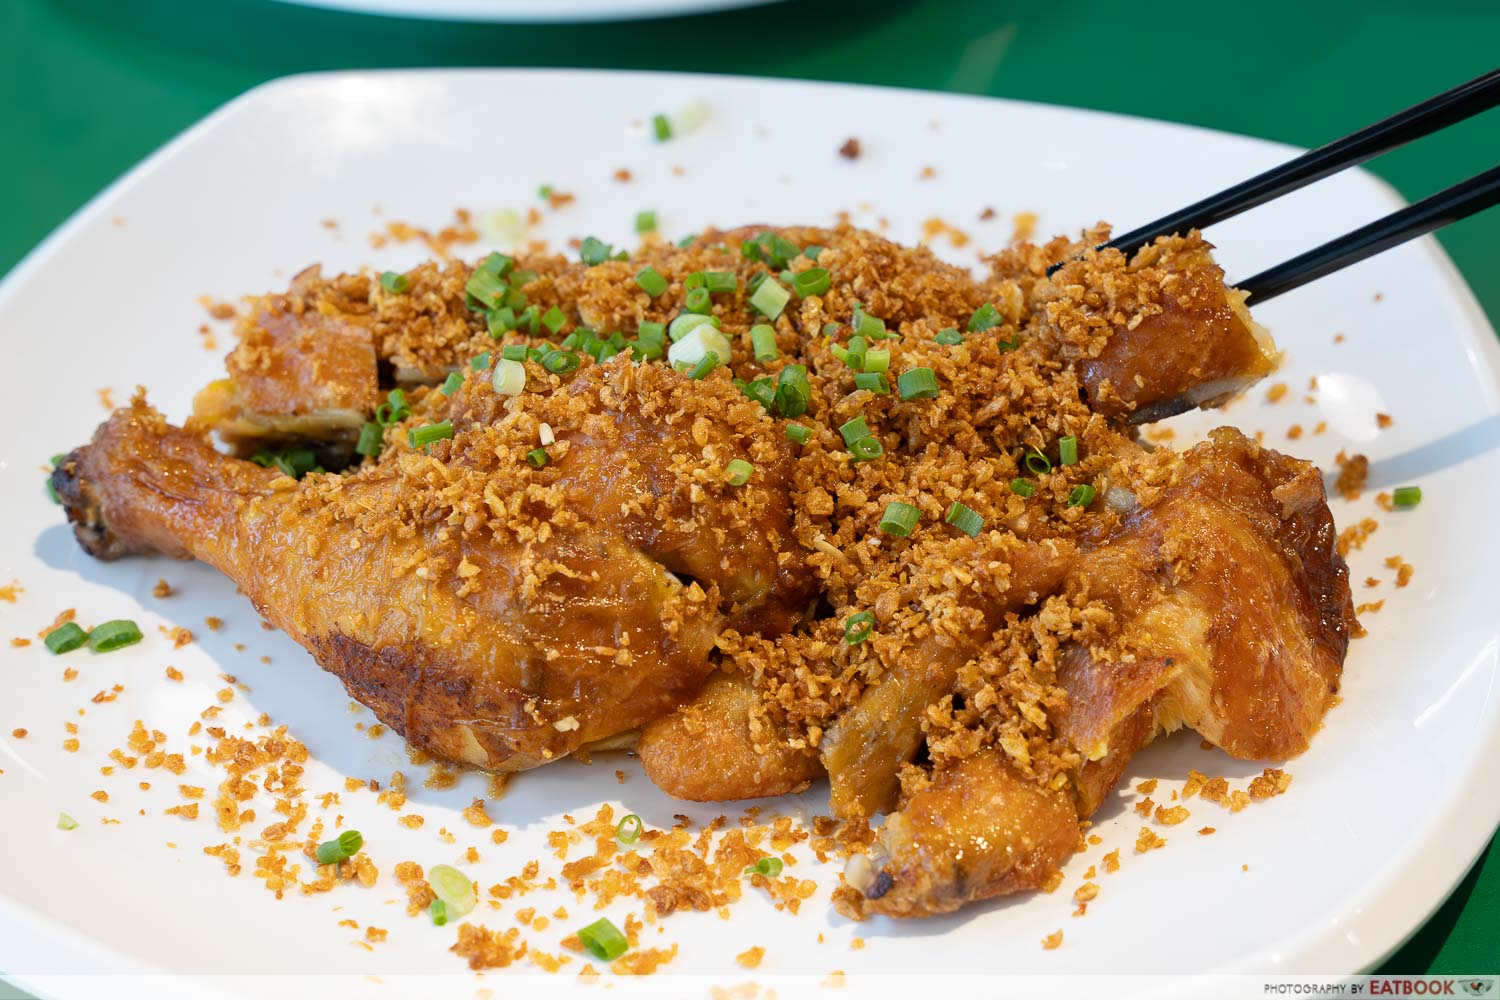 hey kee - temple street crispy roast chicken intro